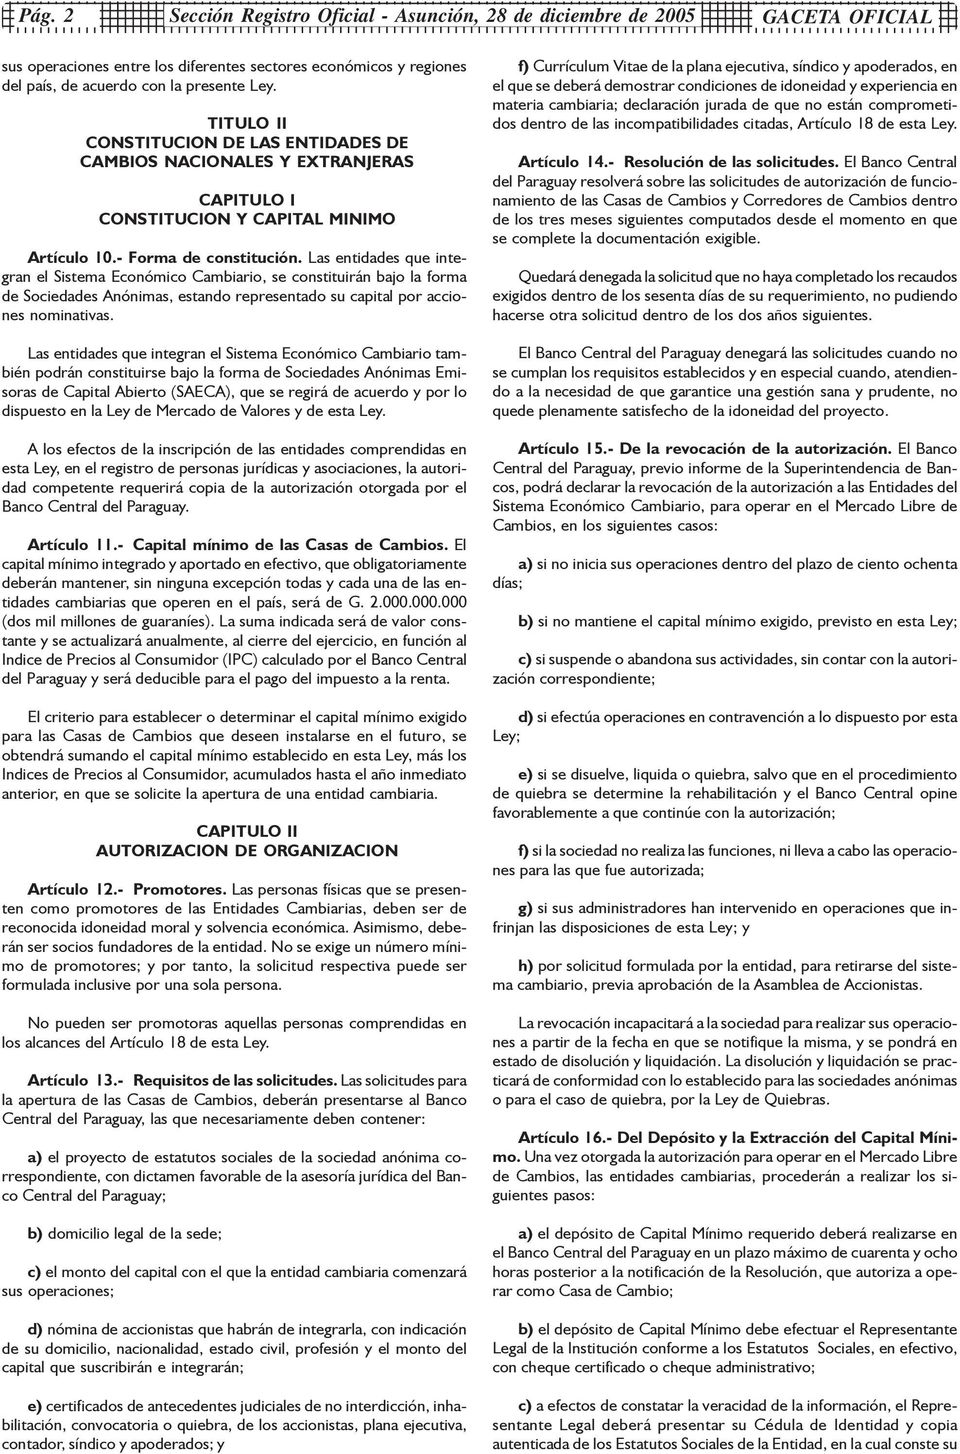 2 Sección Registro Oficial - Asunción, 28 de diciembre de 2005 GACETA OFICIAL 67890678906789012678906789067890126789067890678901267890678906789